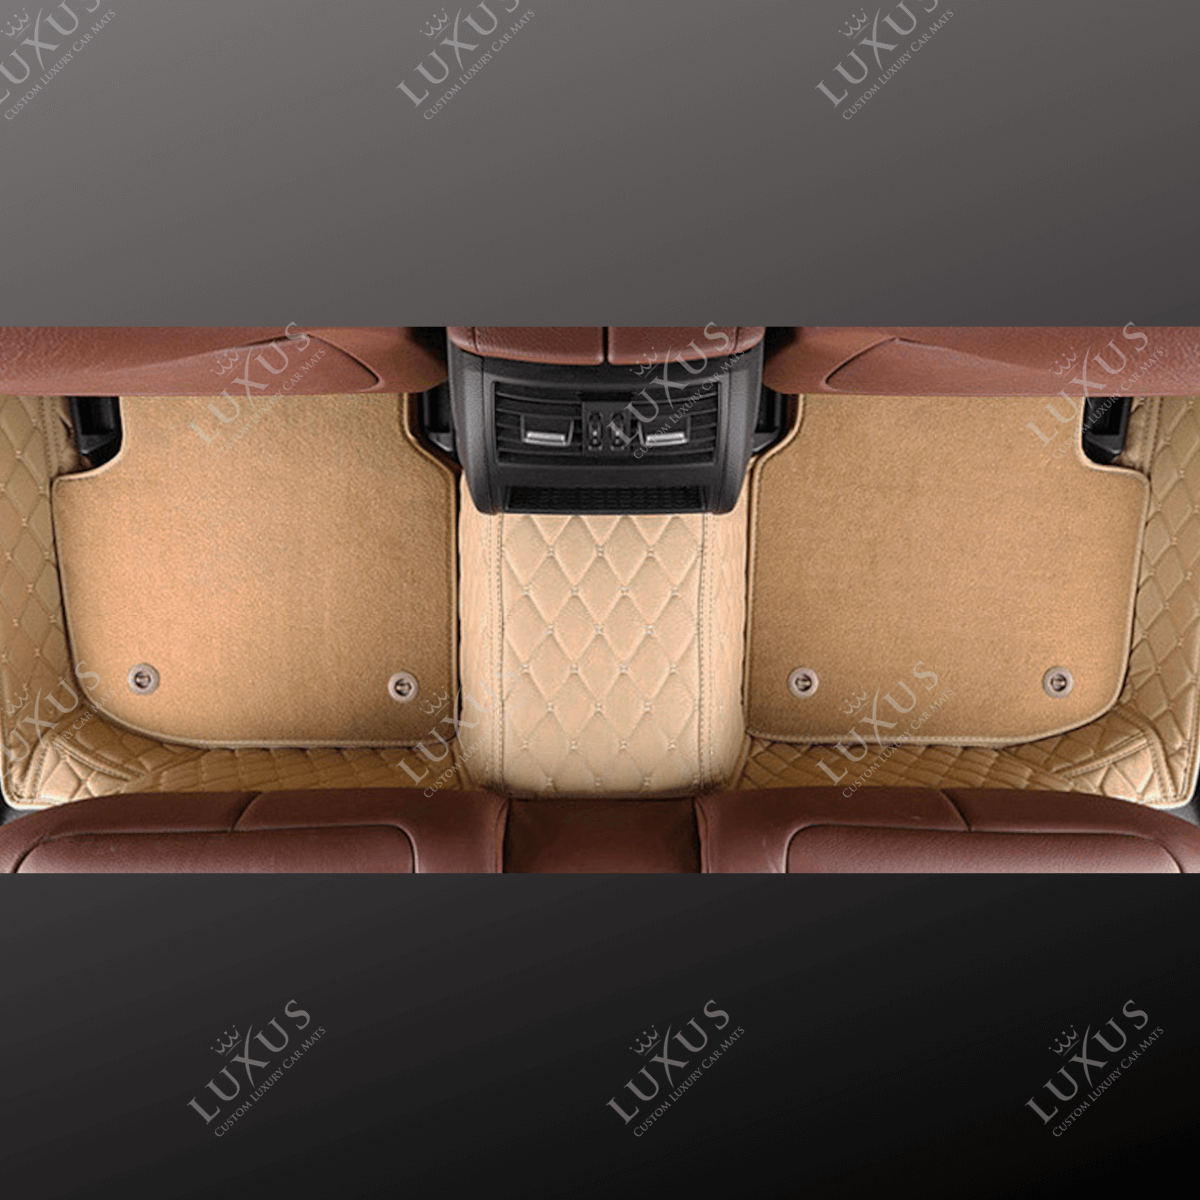 Cream Beige Diamond Base & Beige Top Carpet Double Layer Luxury Car Mats Set